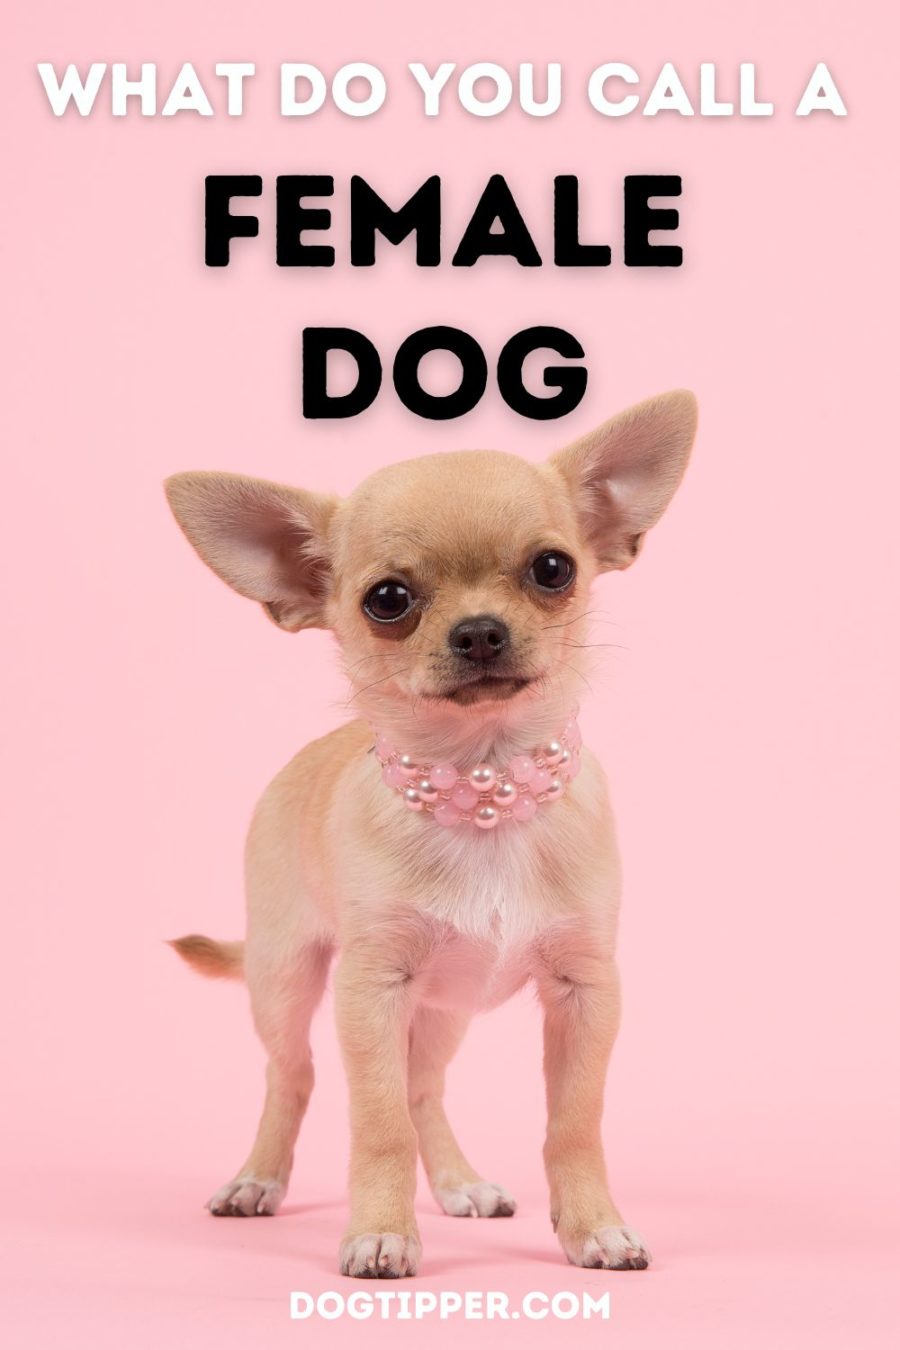 What do you call a female dog?